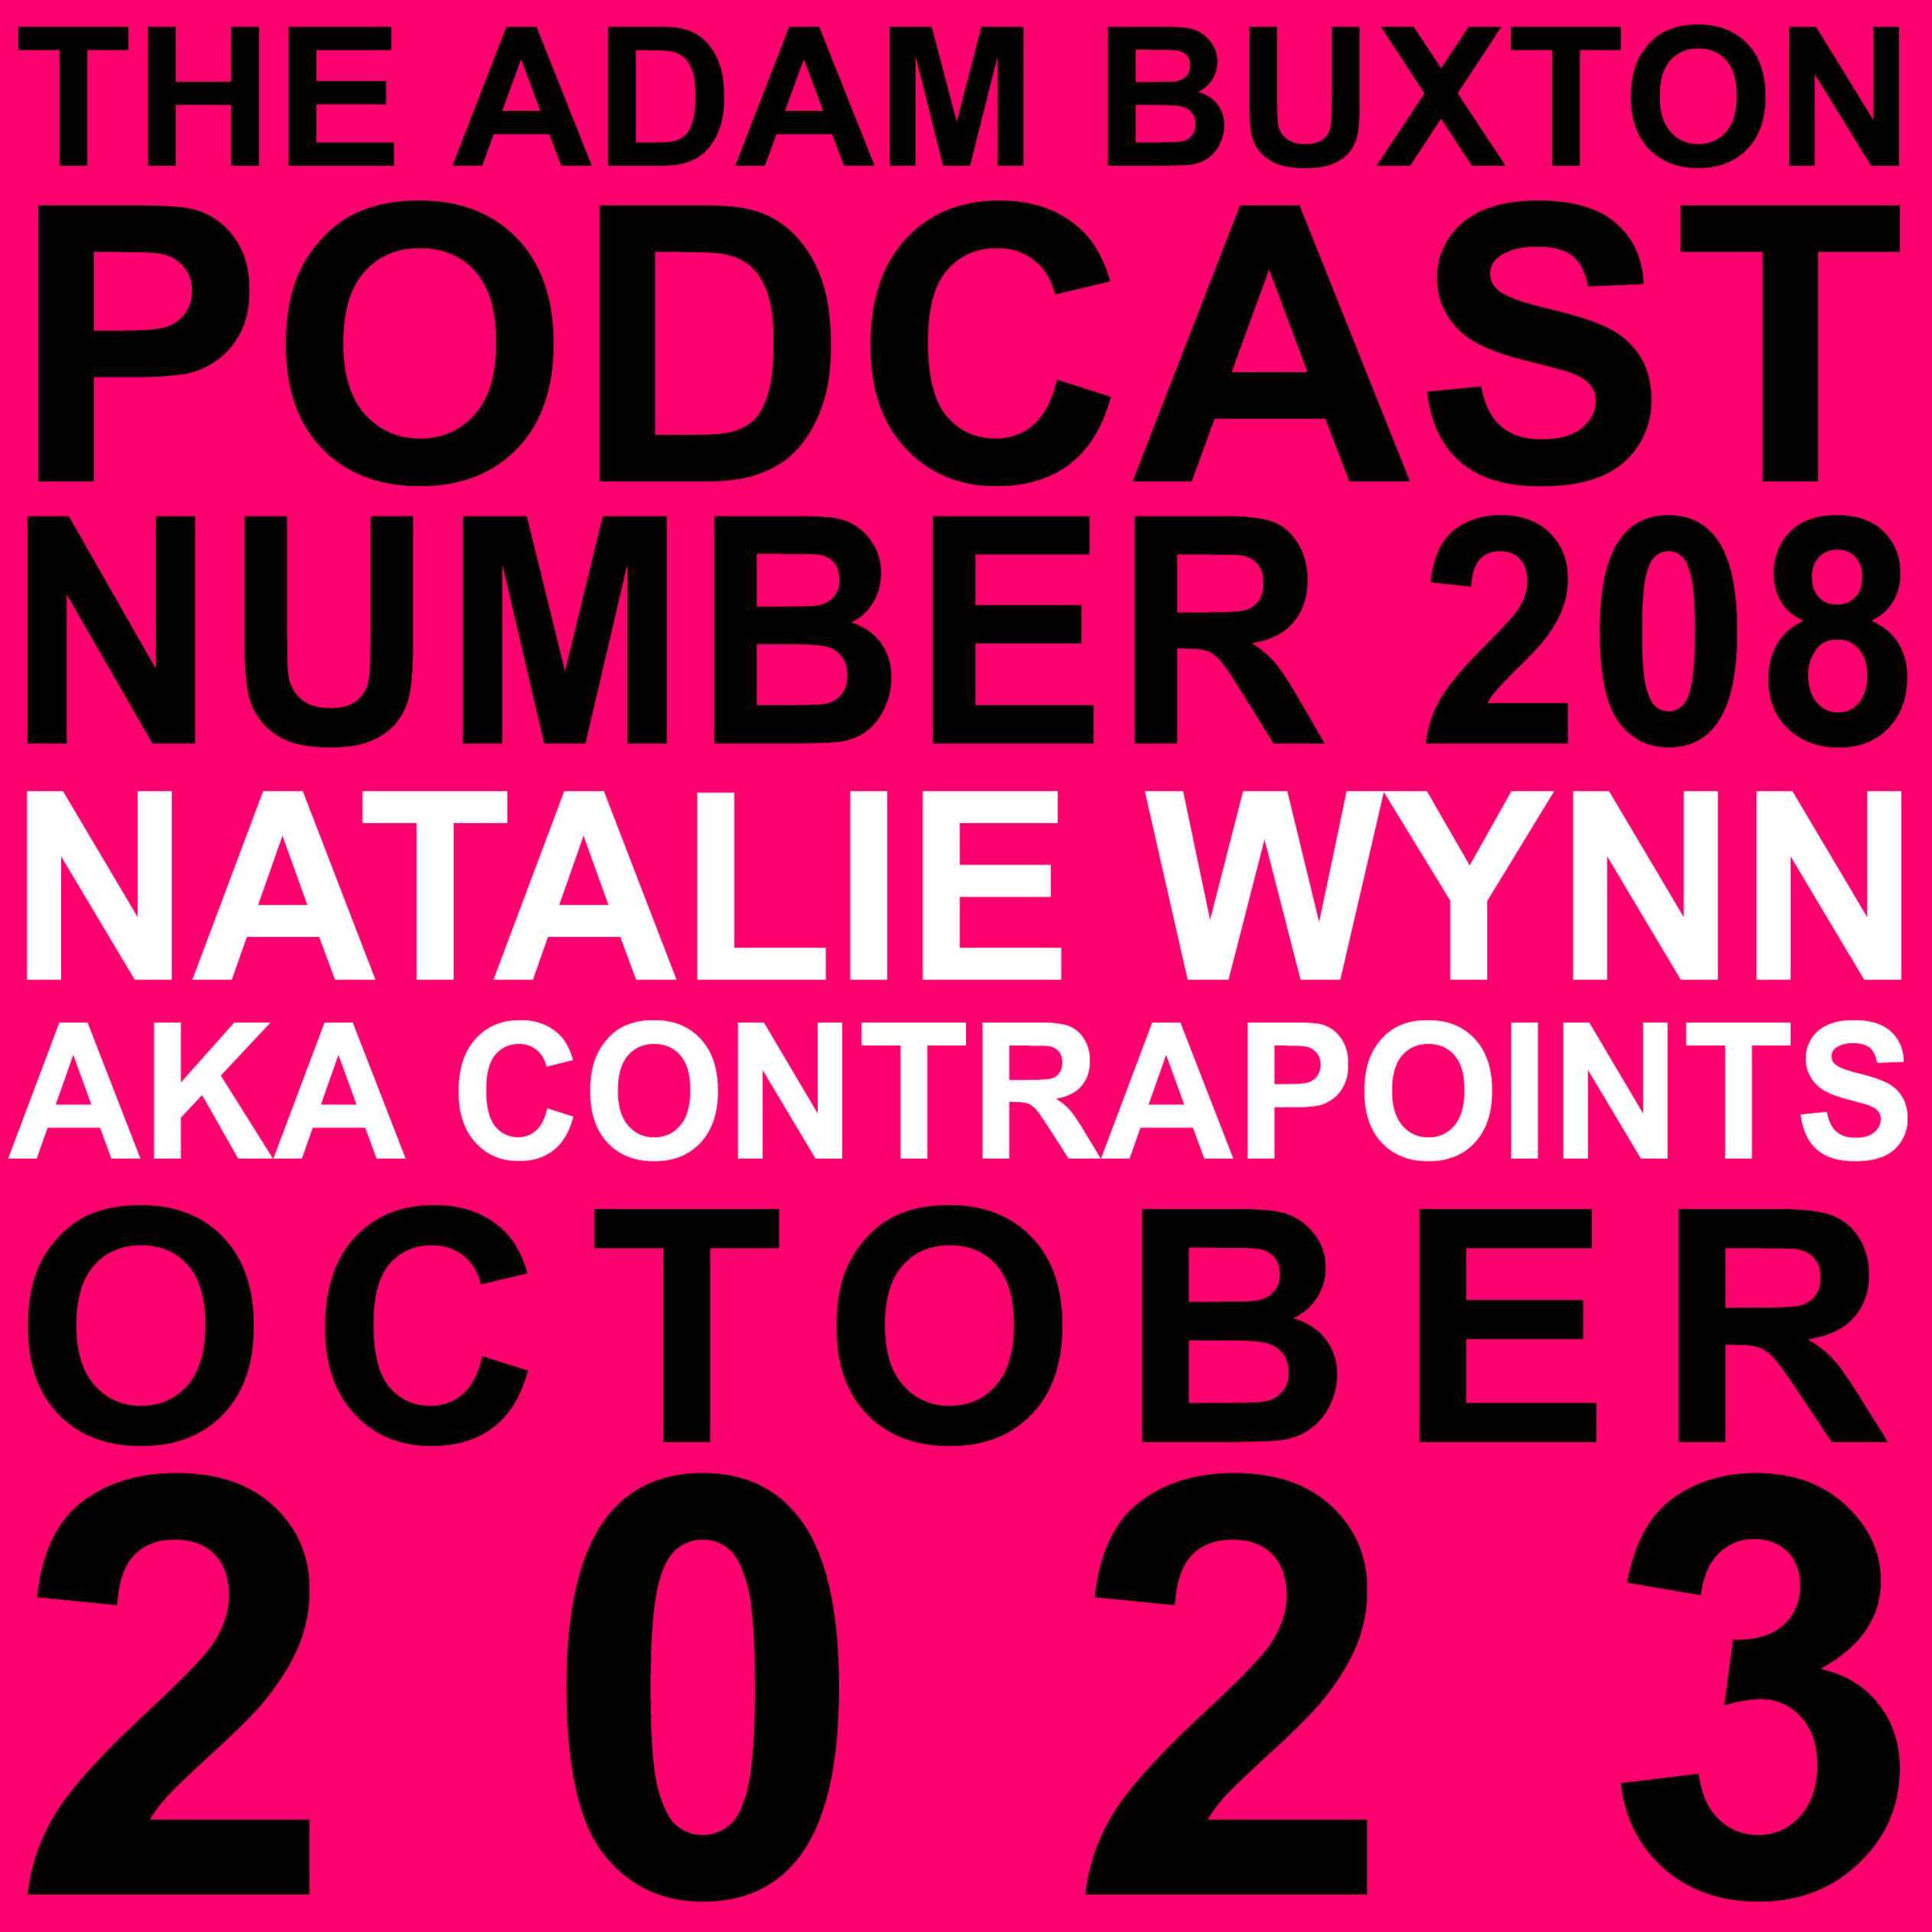 EP.208 - NATALIE WYNN aka CONTRAPOINTS